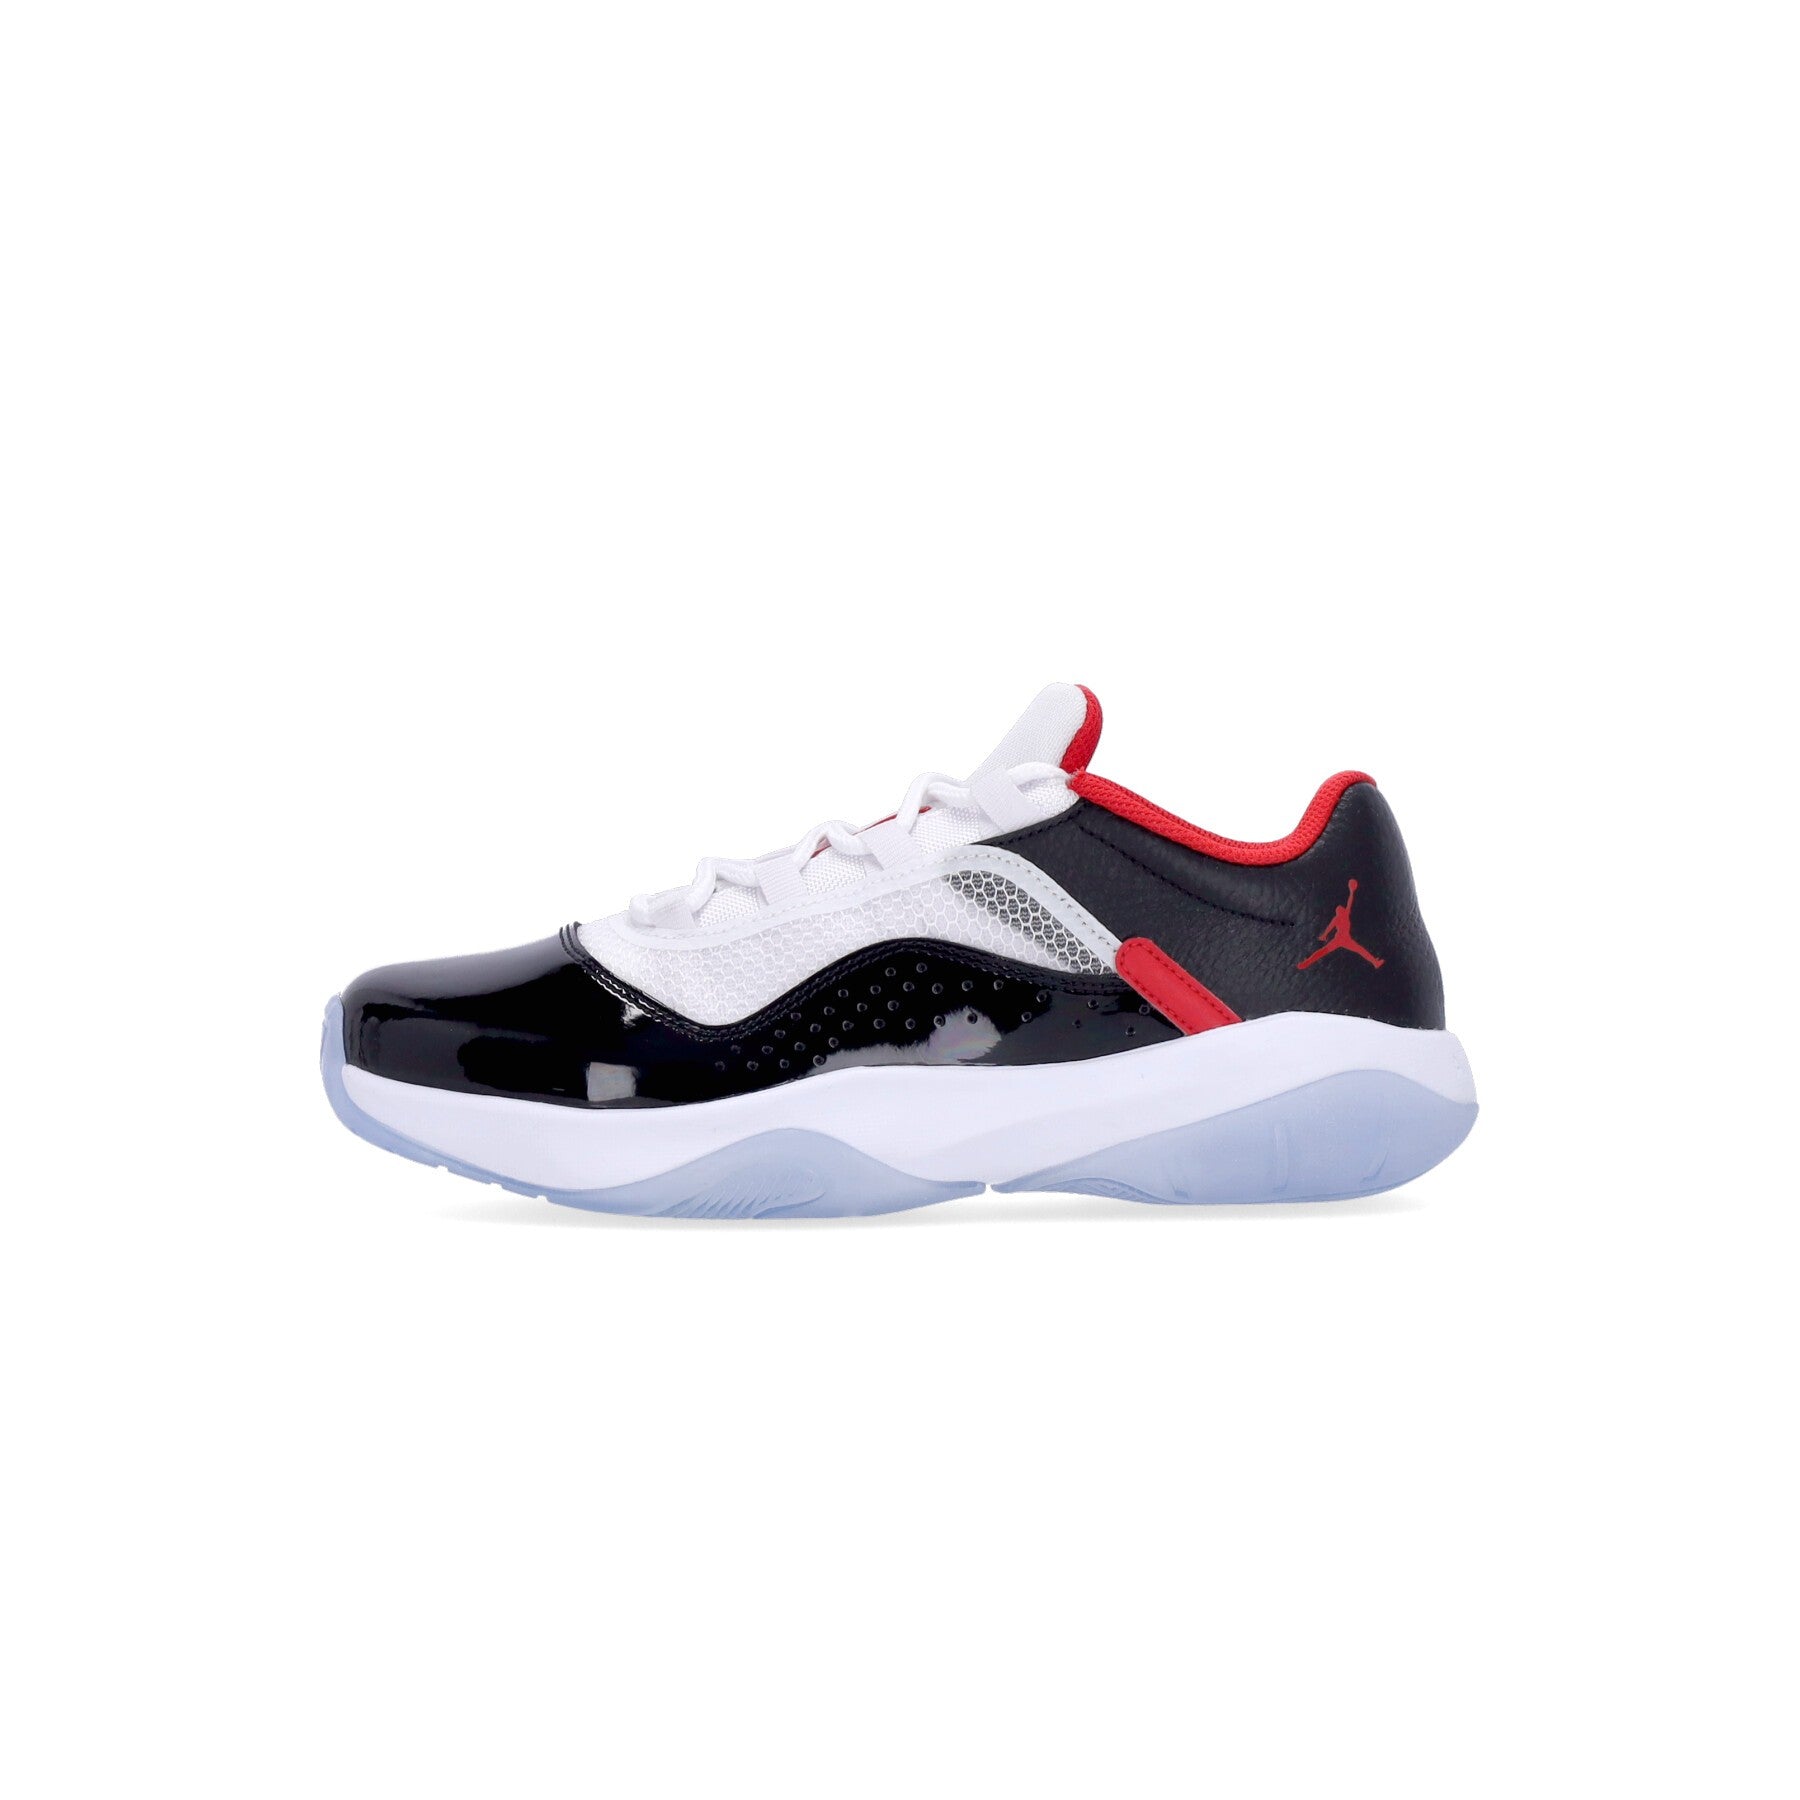 Jordan, Scarpa Bassa Uomo Air Jordan 11 Cmft Low, White/university Red/black